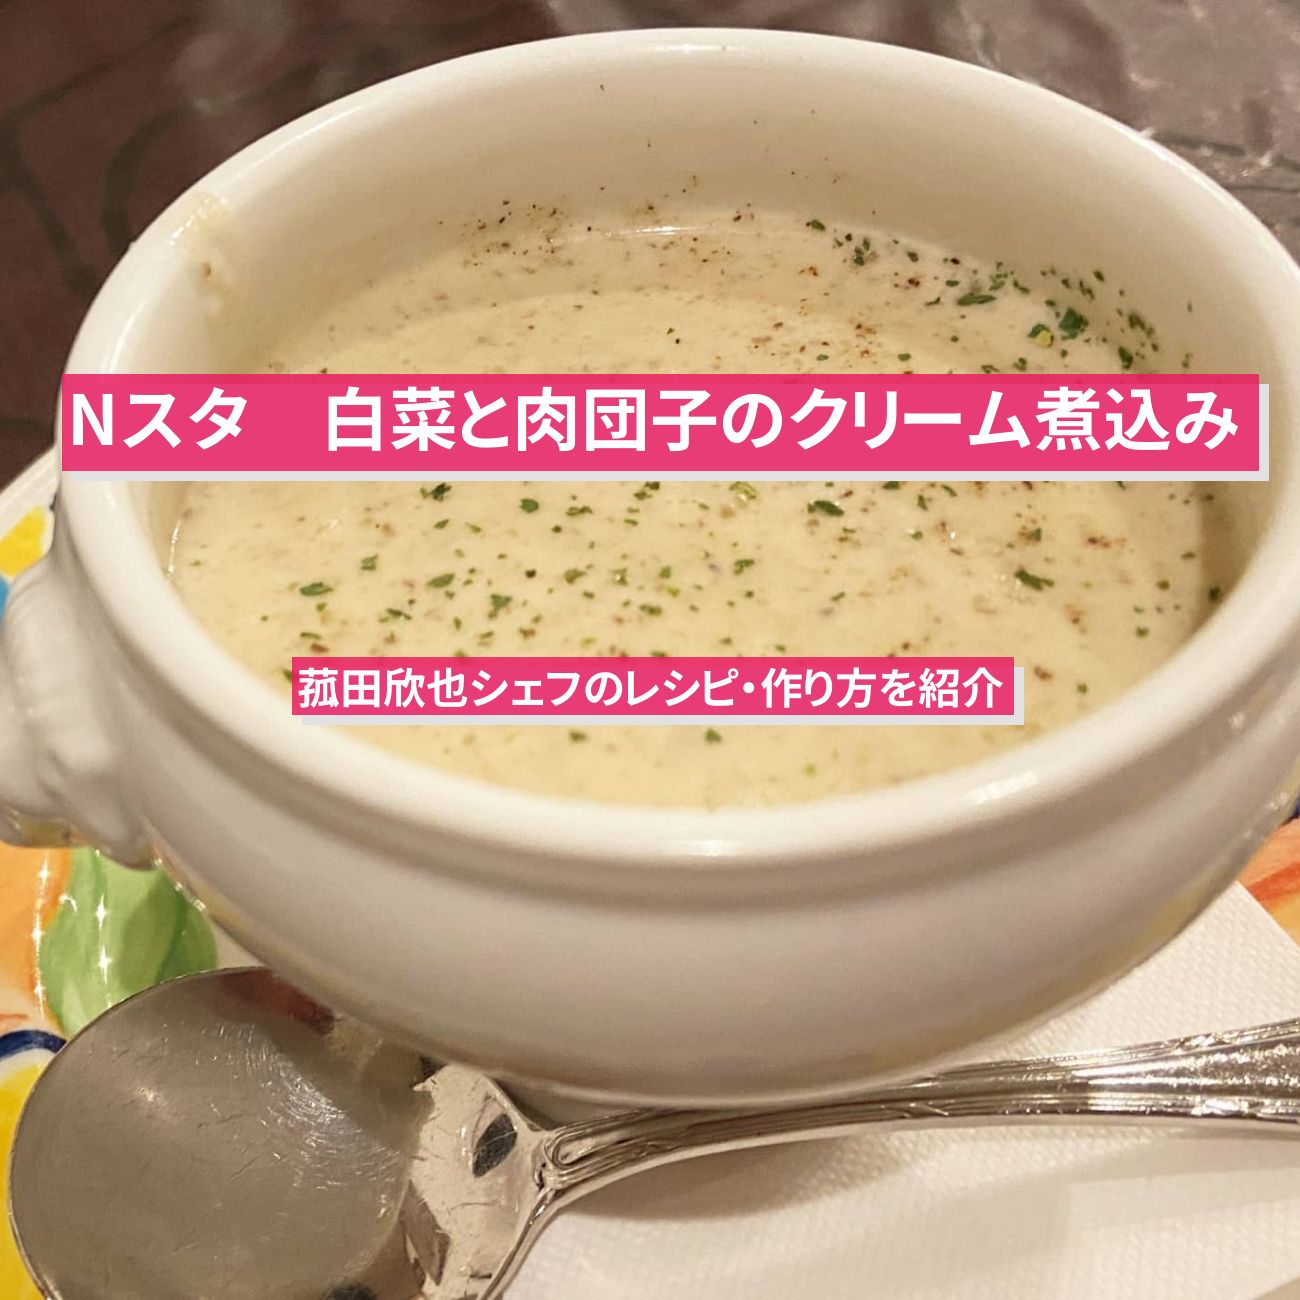 【Nスタ】『白菜と肉団子のクリーム煮込み』菰田欣也シェフのレシピ・作り方を紹介